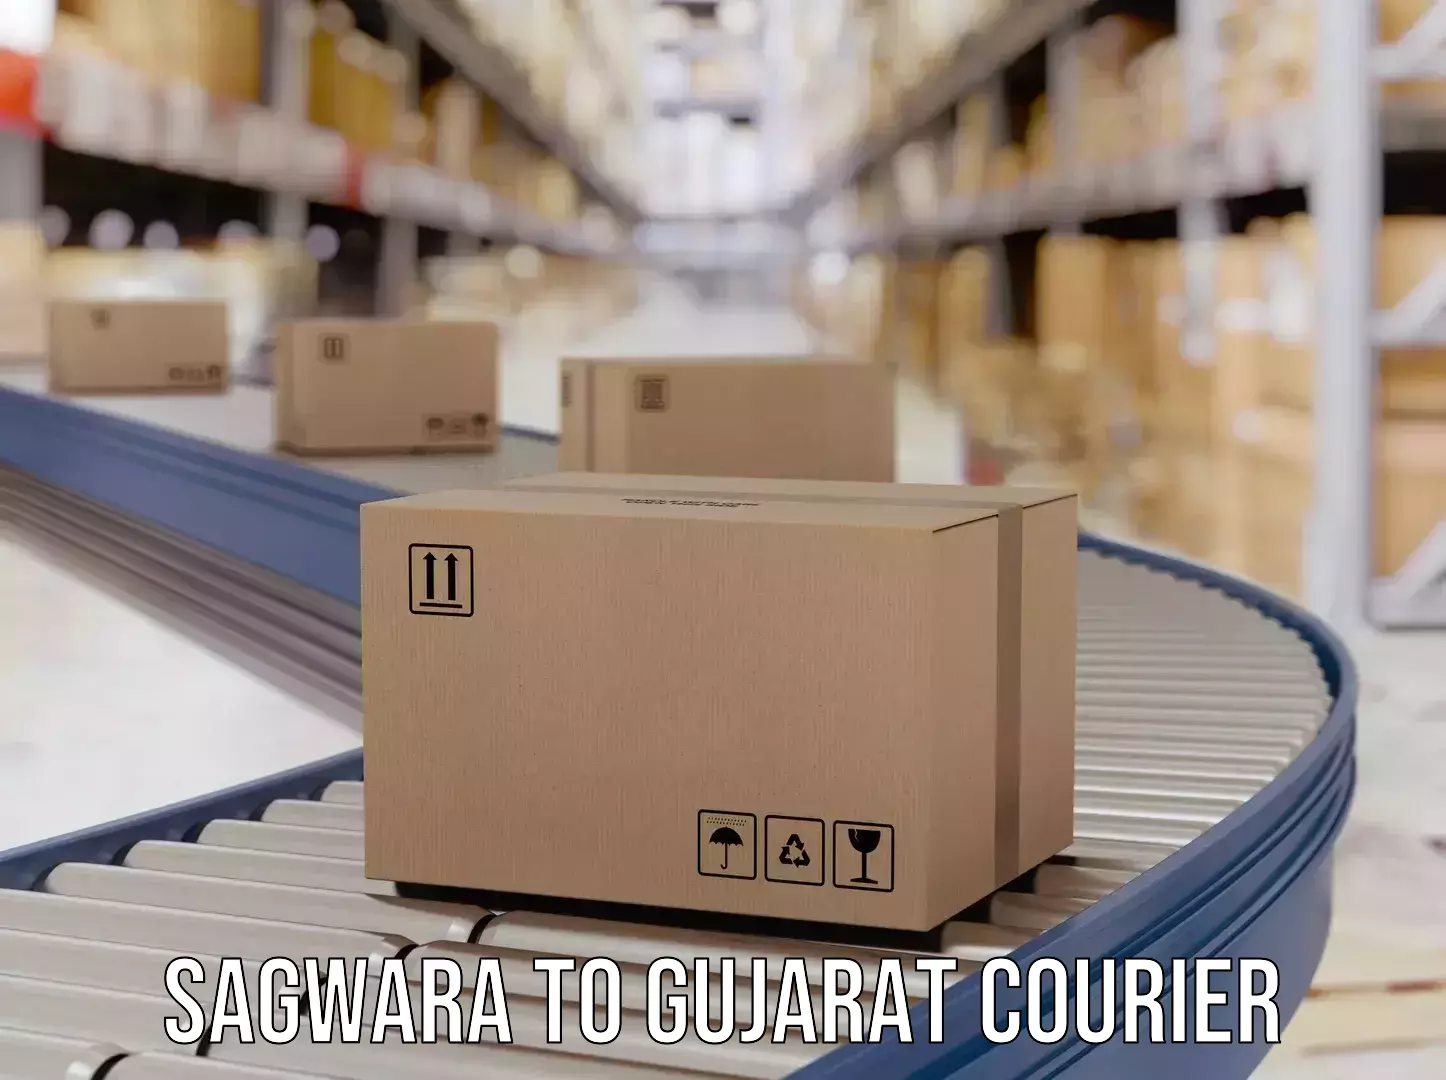 Courier service partnerships Sagwara to Ahmedabad